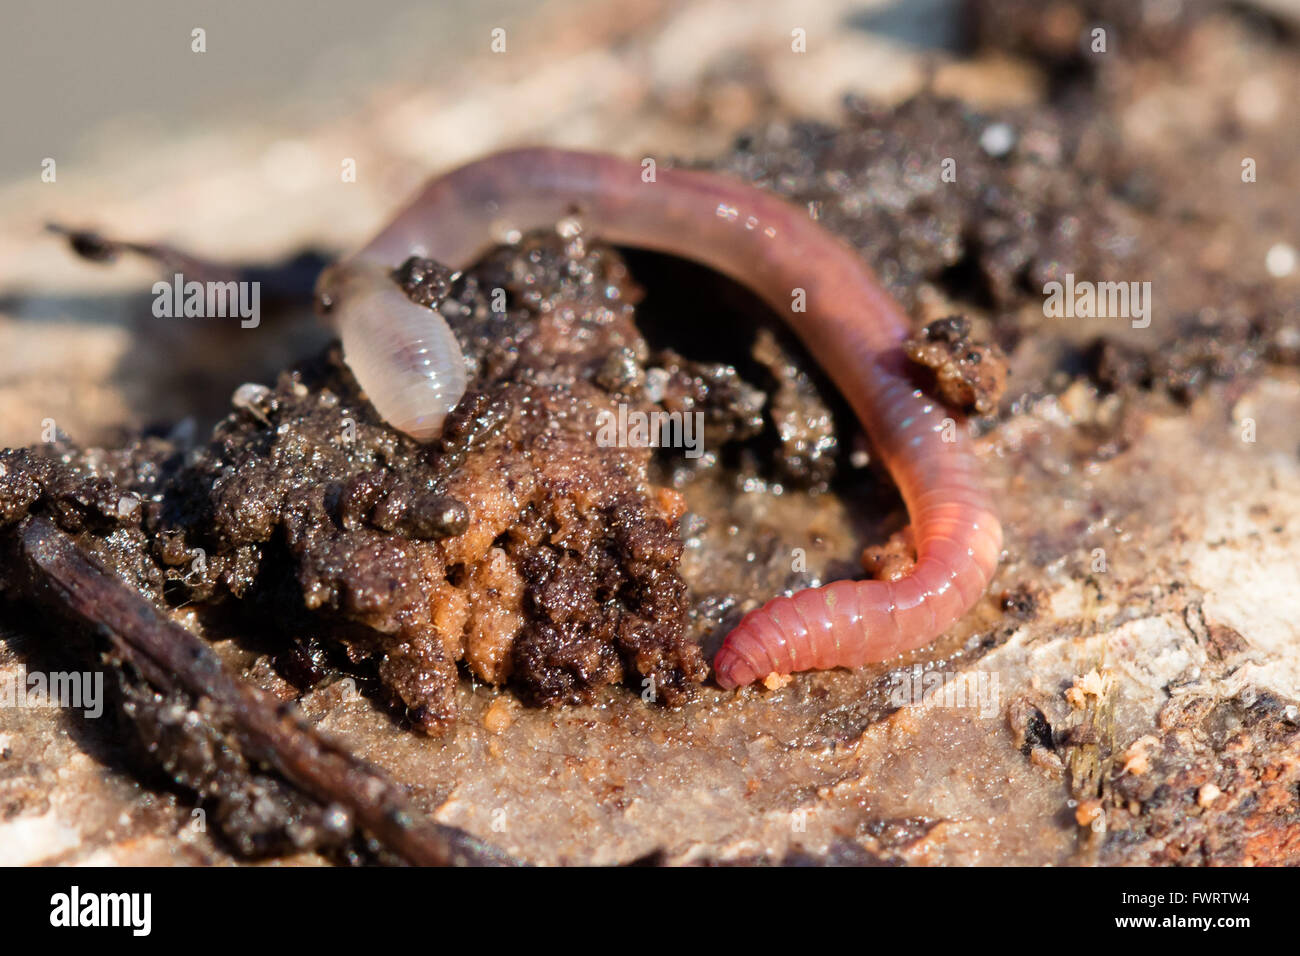 Earthworms on a piece of wood, macro photo, selective focus Stock Photo